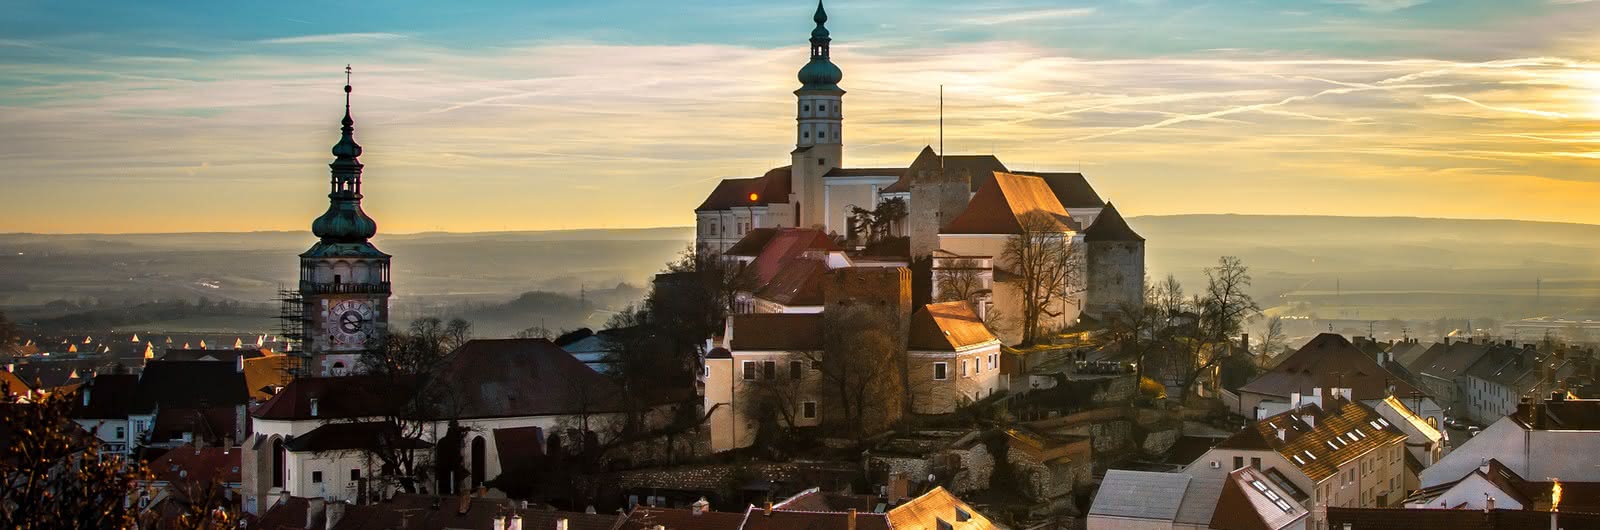 Česká republika panorama